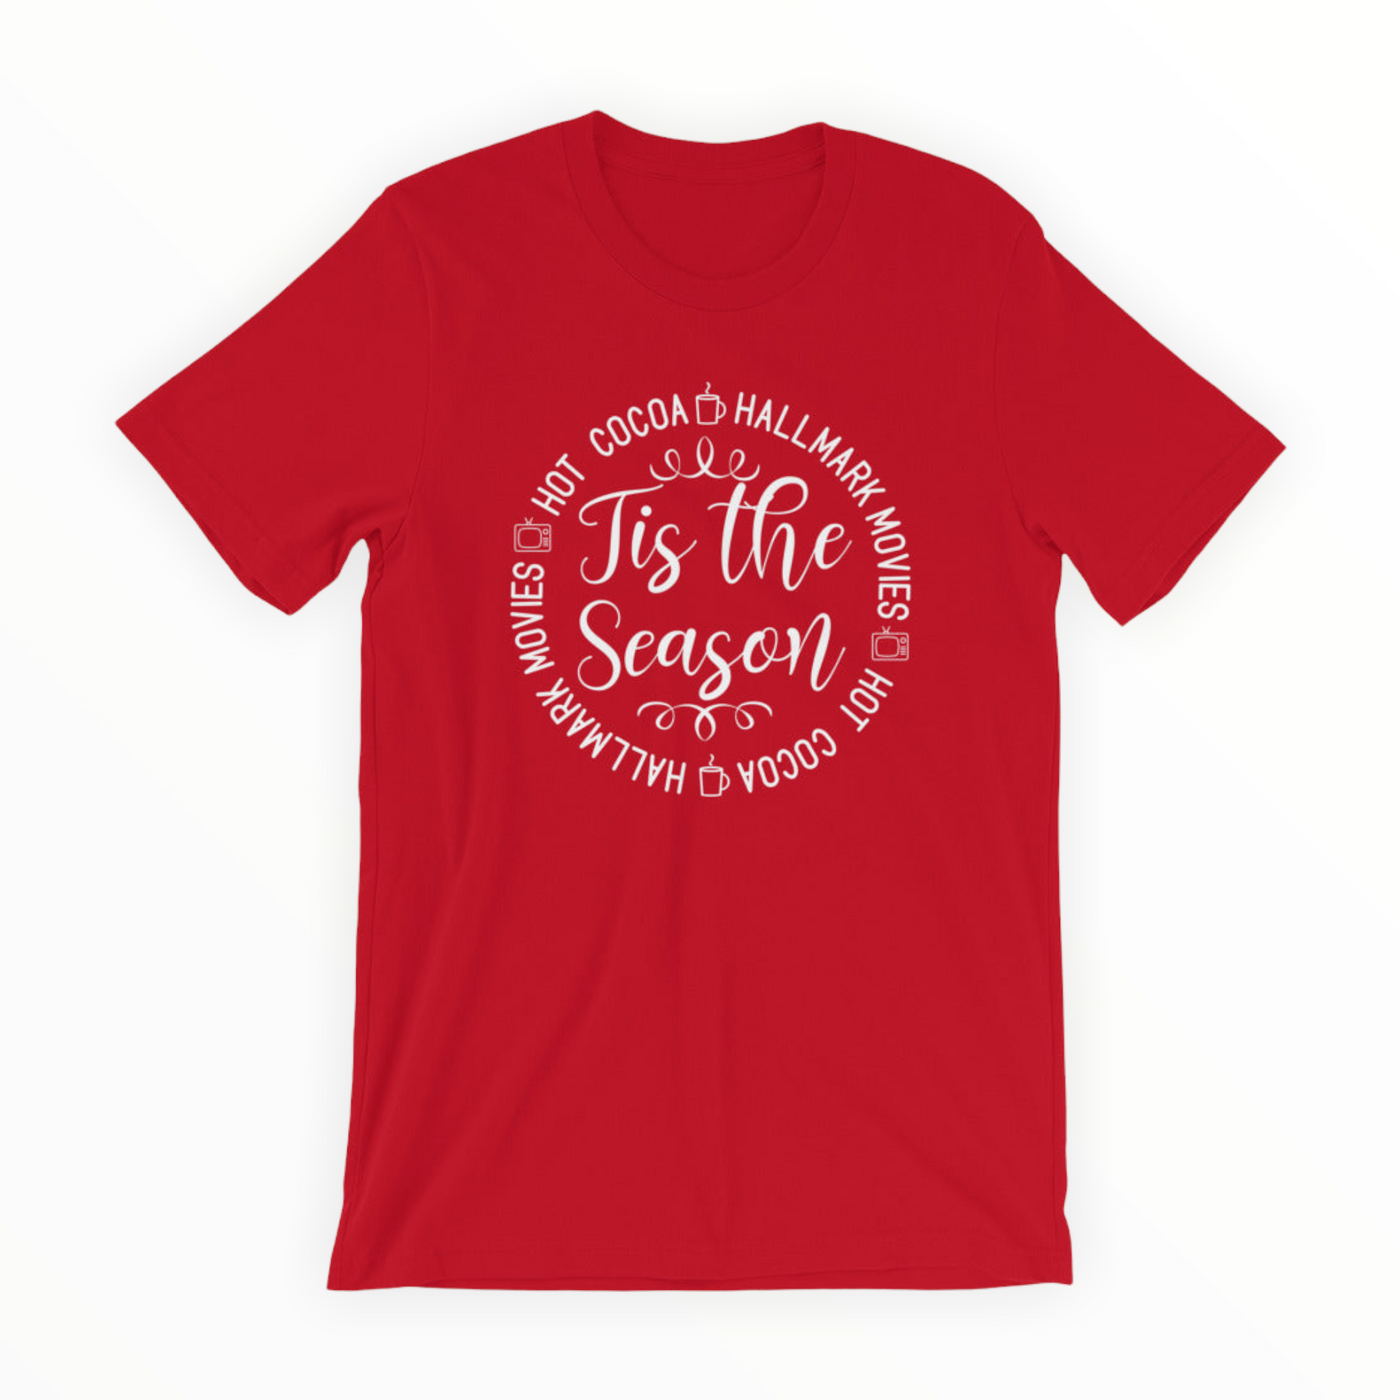 Tis The Season Red Unisex T-Shirt